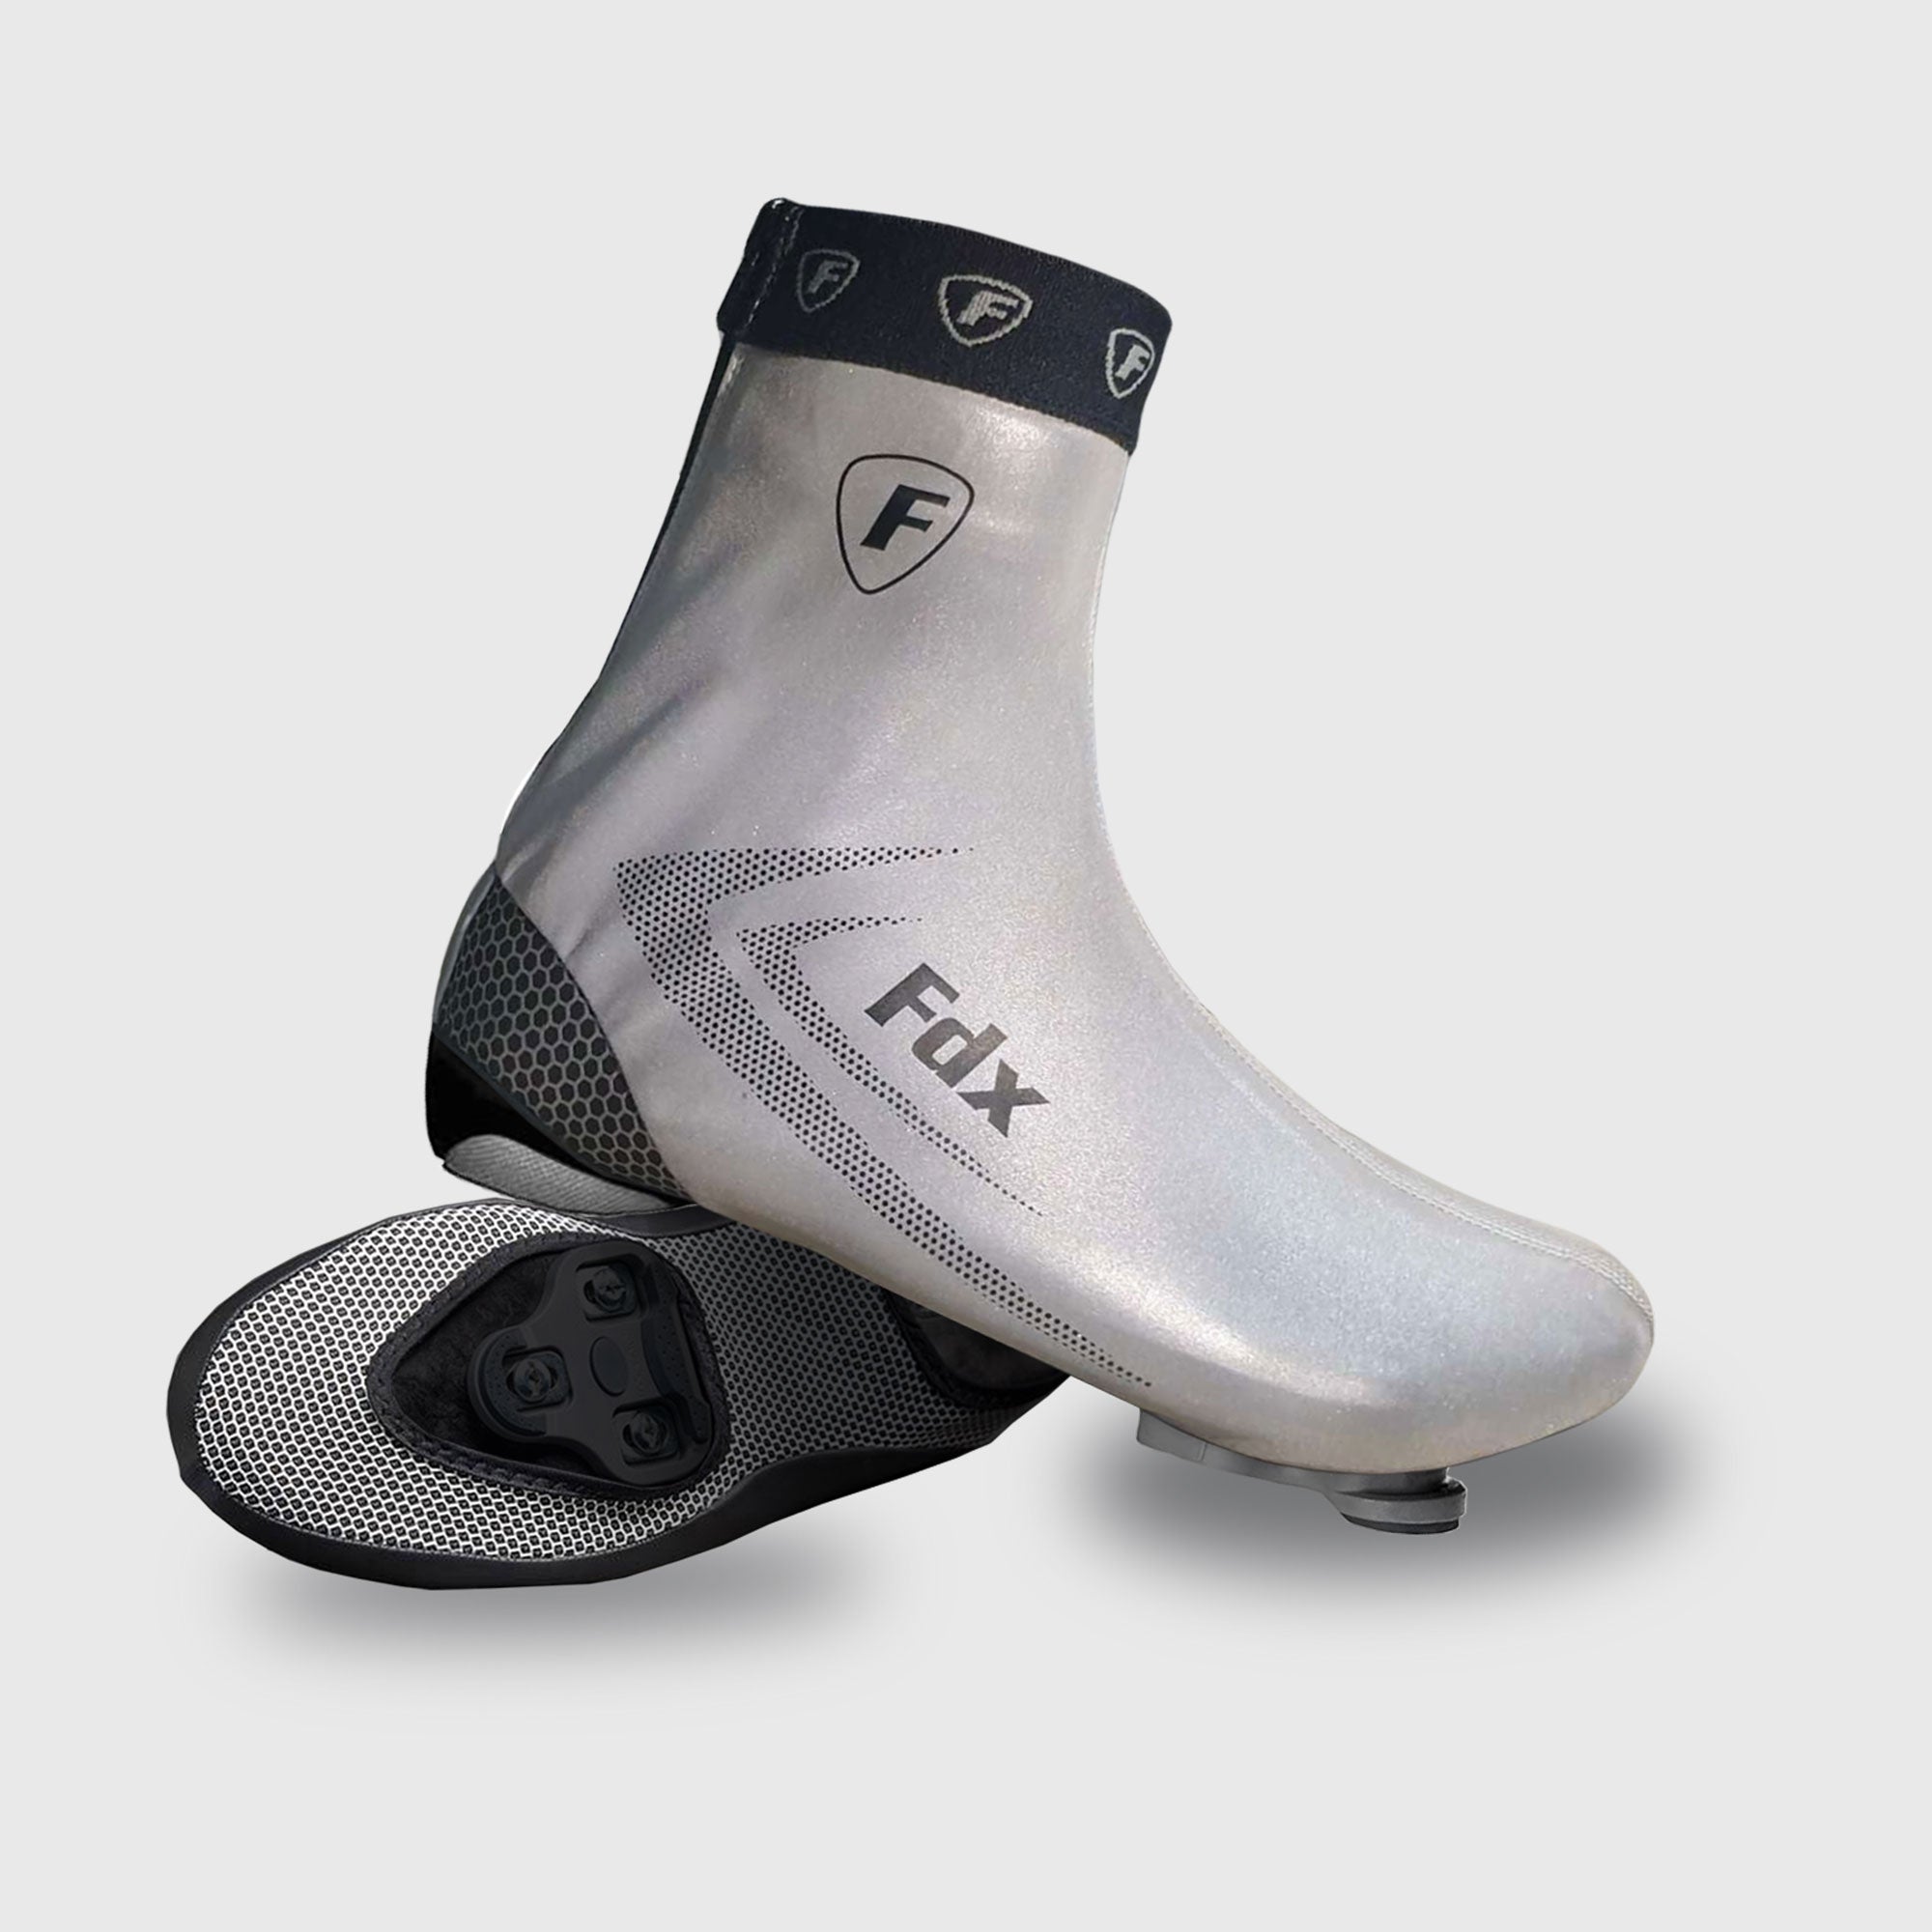 Fdx Unisex Grey Cycling Over Shoe Breathable Lightweight Rainproof Hi Viz Reflective Details Men Women Cycling Gear UK